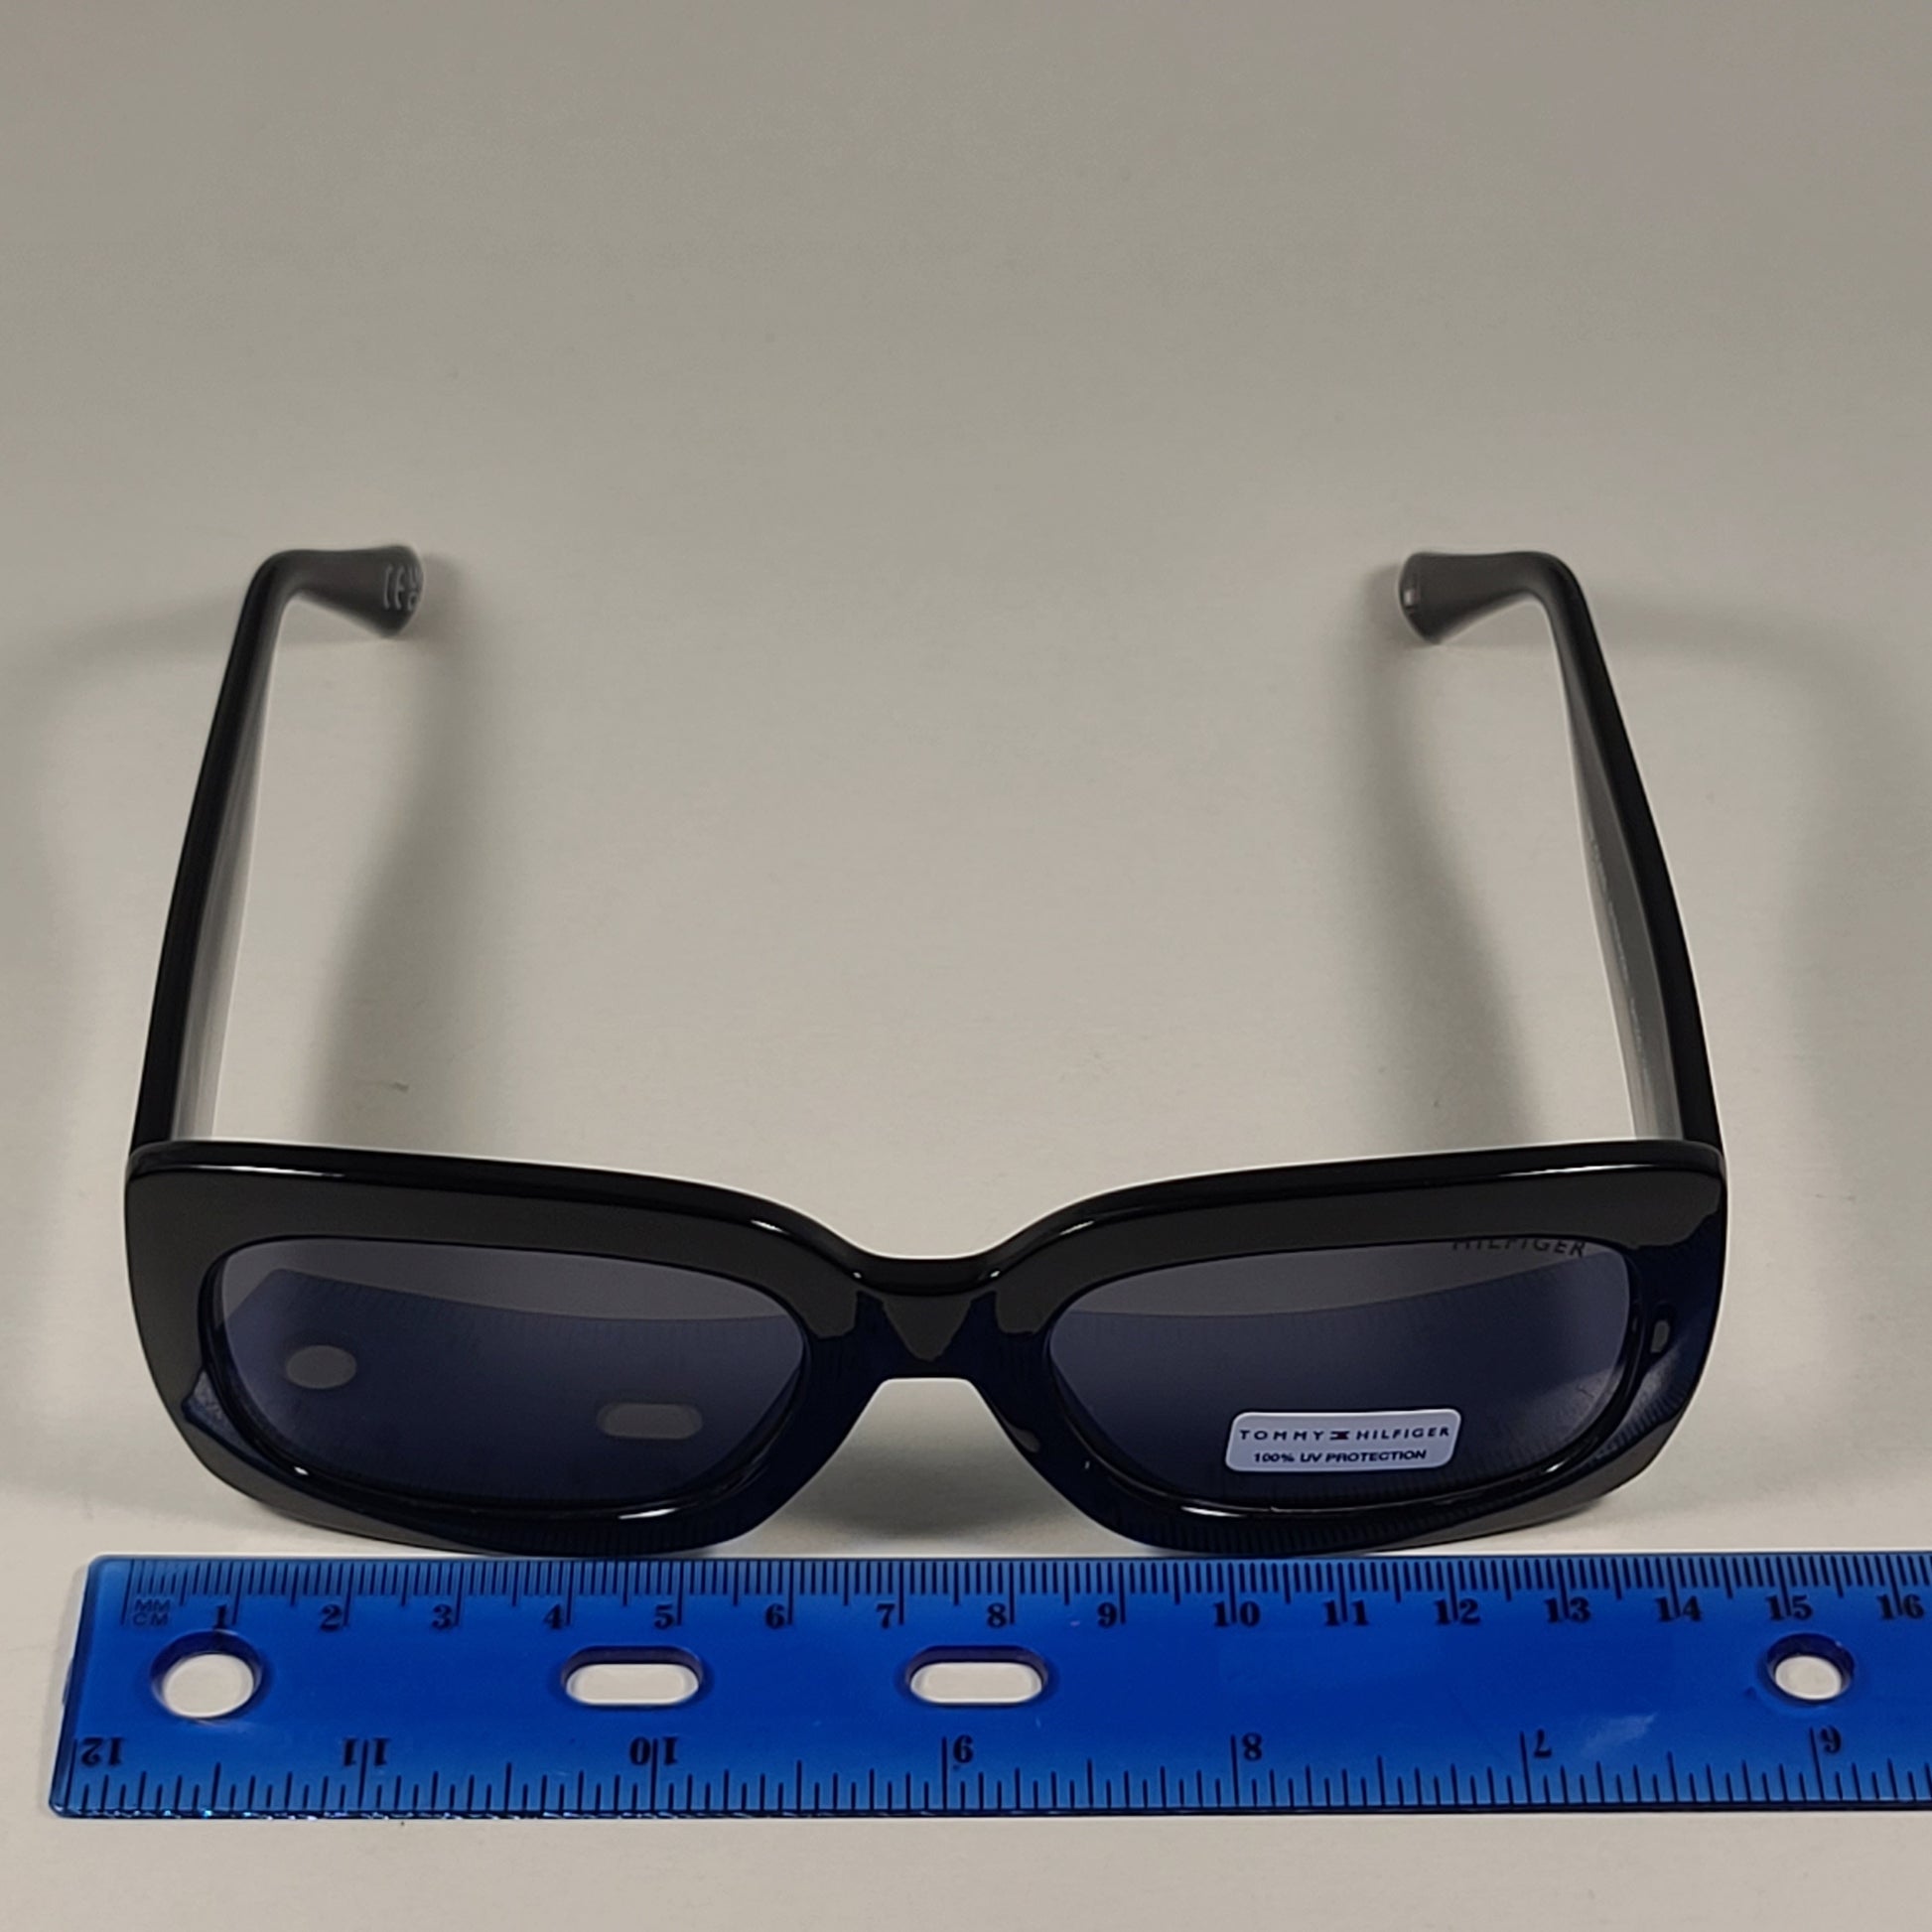 Tommy Hilfiger WP OL603 Large Oval Sunglasses Shiny Black Frame Gray Tinted Lens - Sunglasses